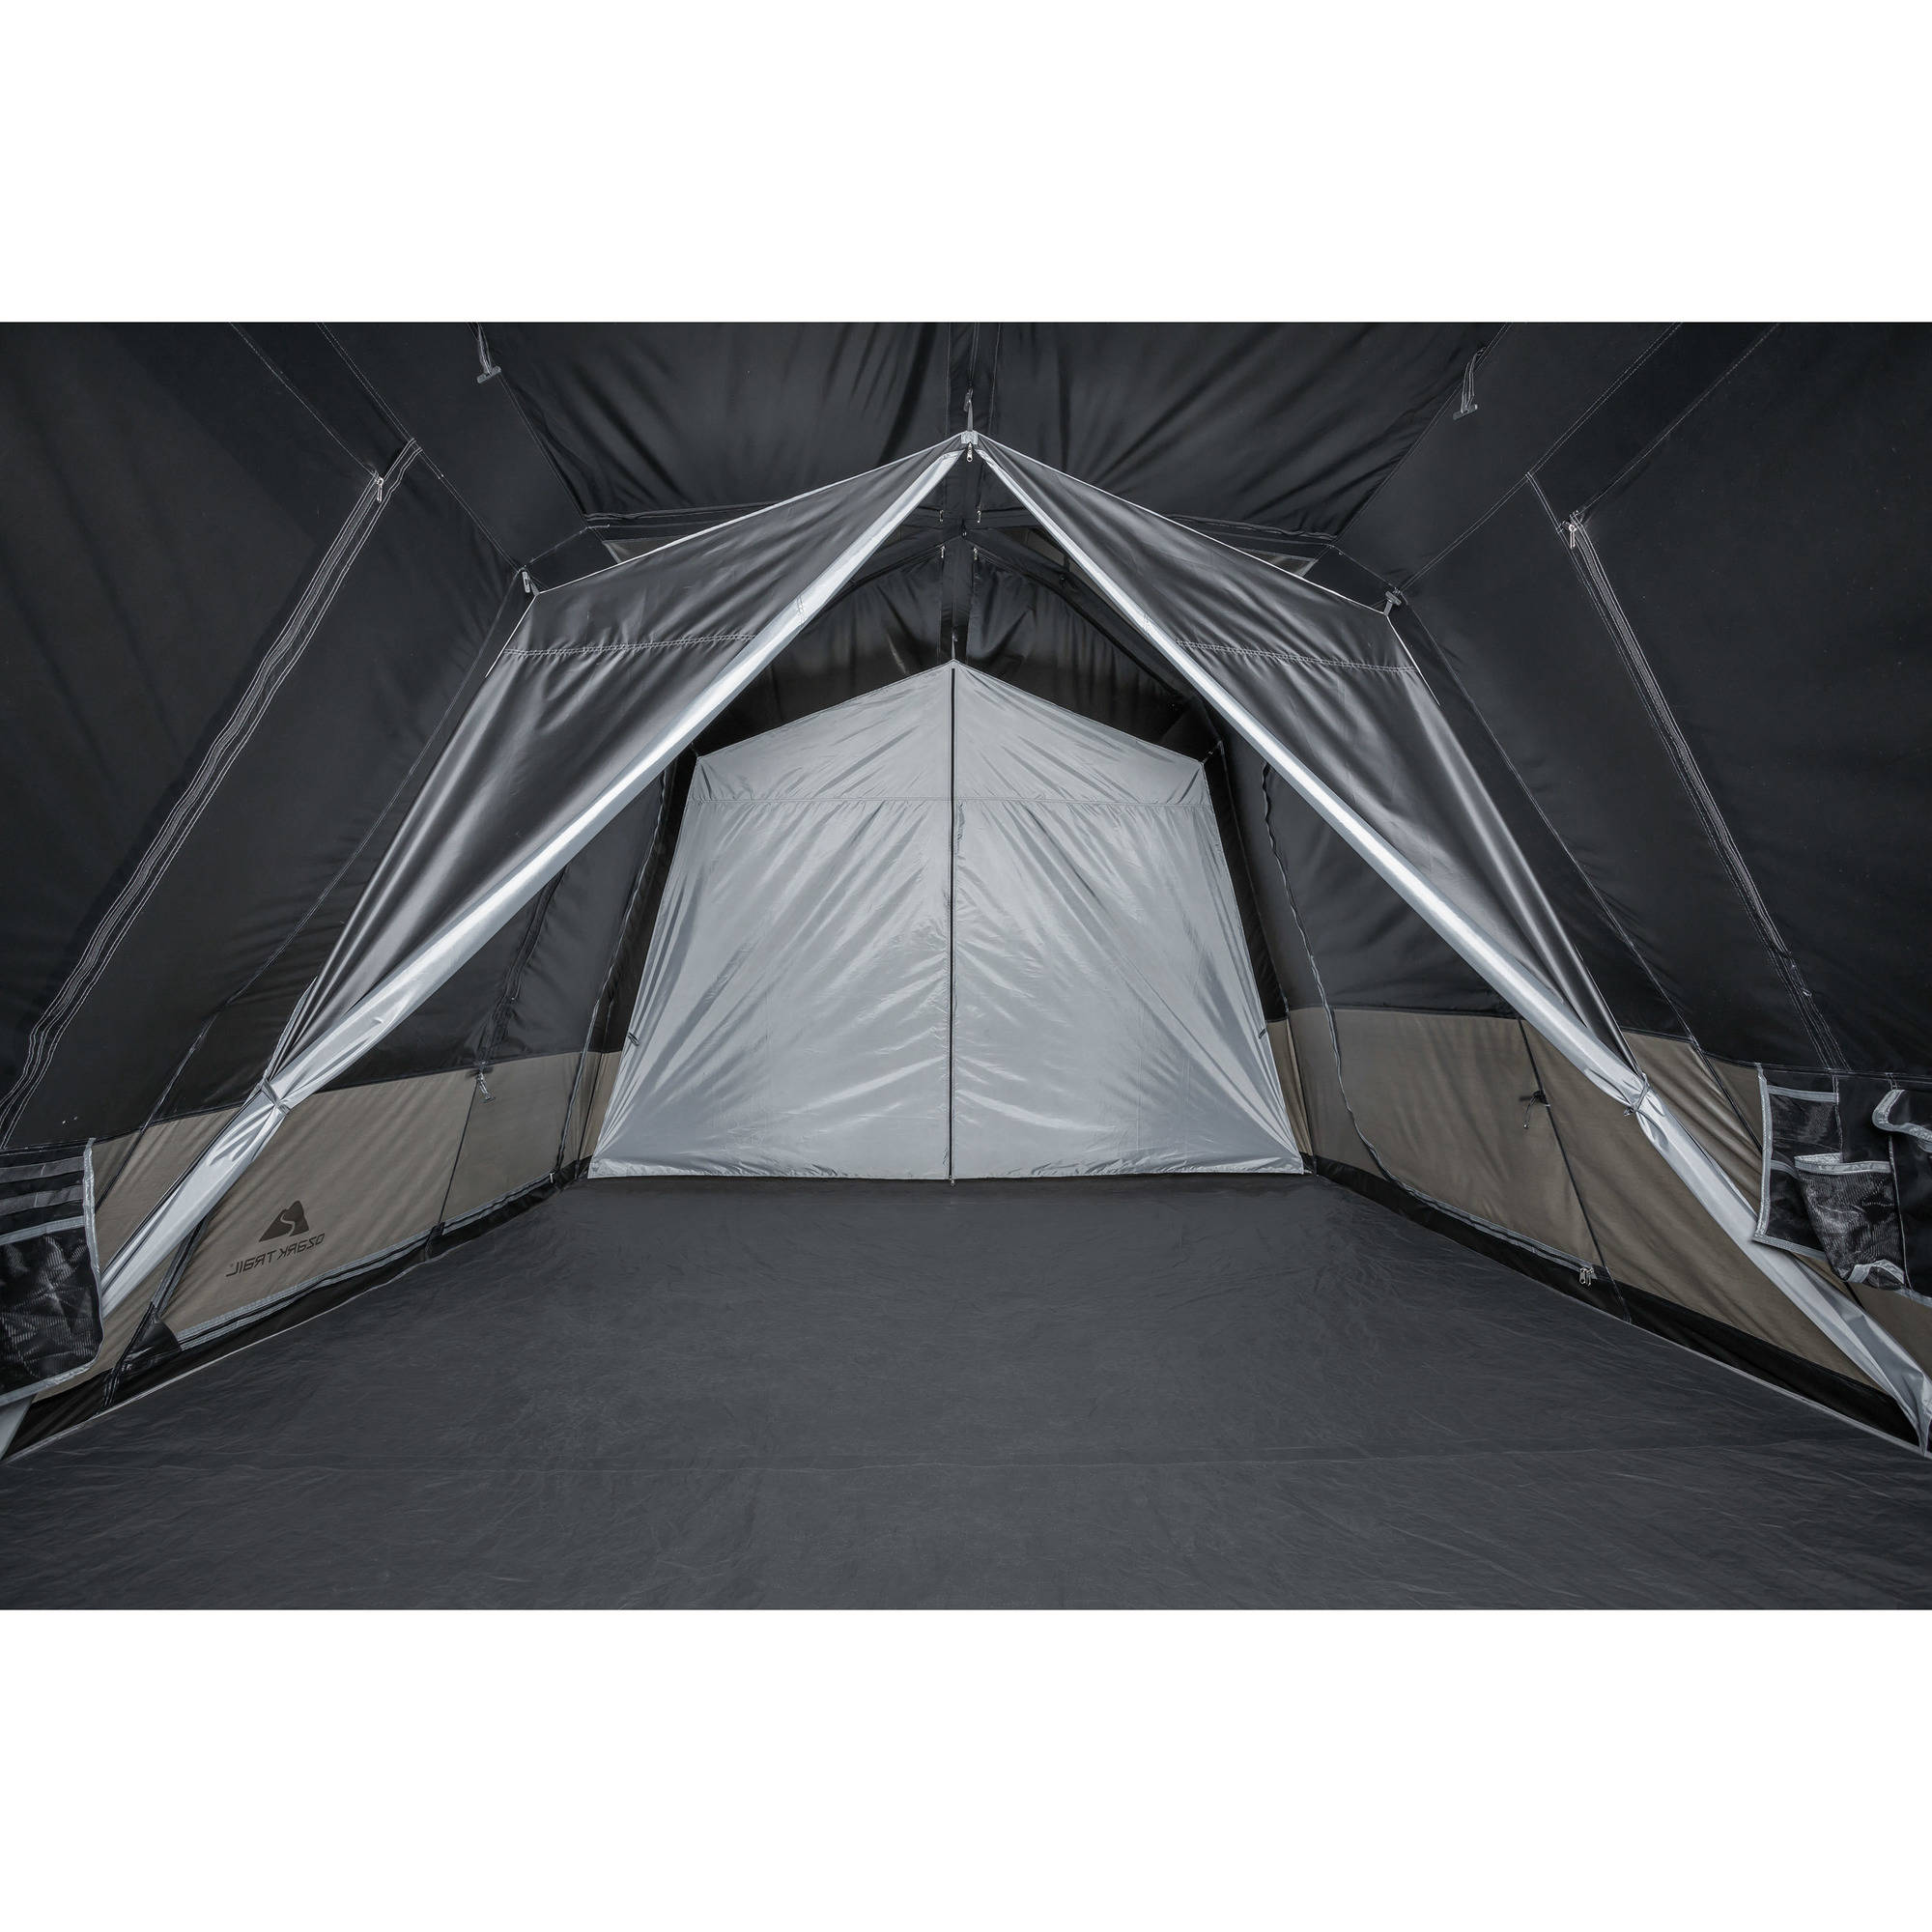 Ozark Trail 20' x 10' Dark Rest Instant Cabin Tent, Sleeps 12, 45.72 lbs - image 5 of 9